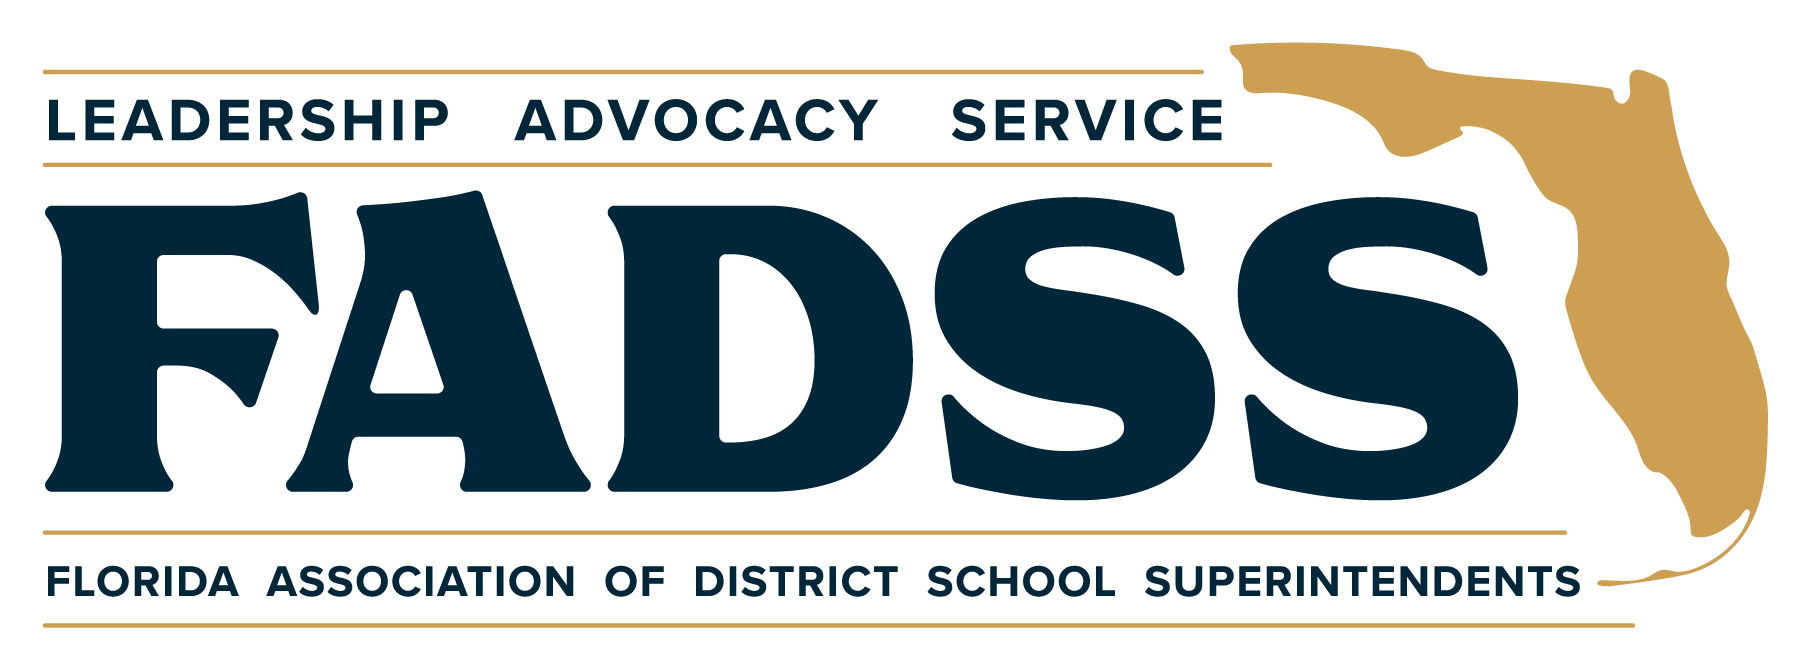 FADSS (Florida Association of District School Superintendents) Logo